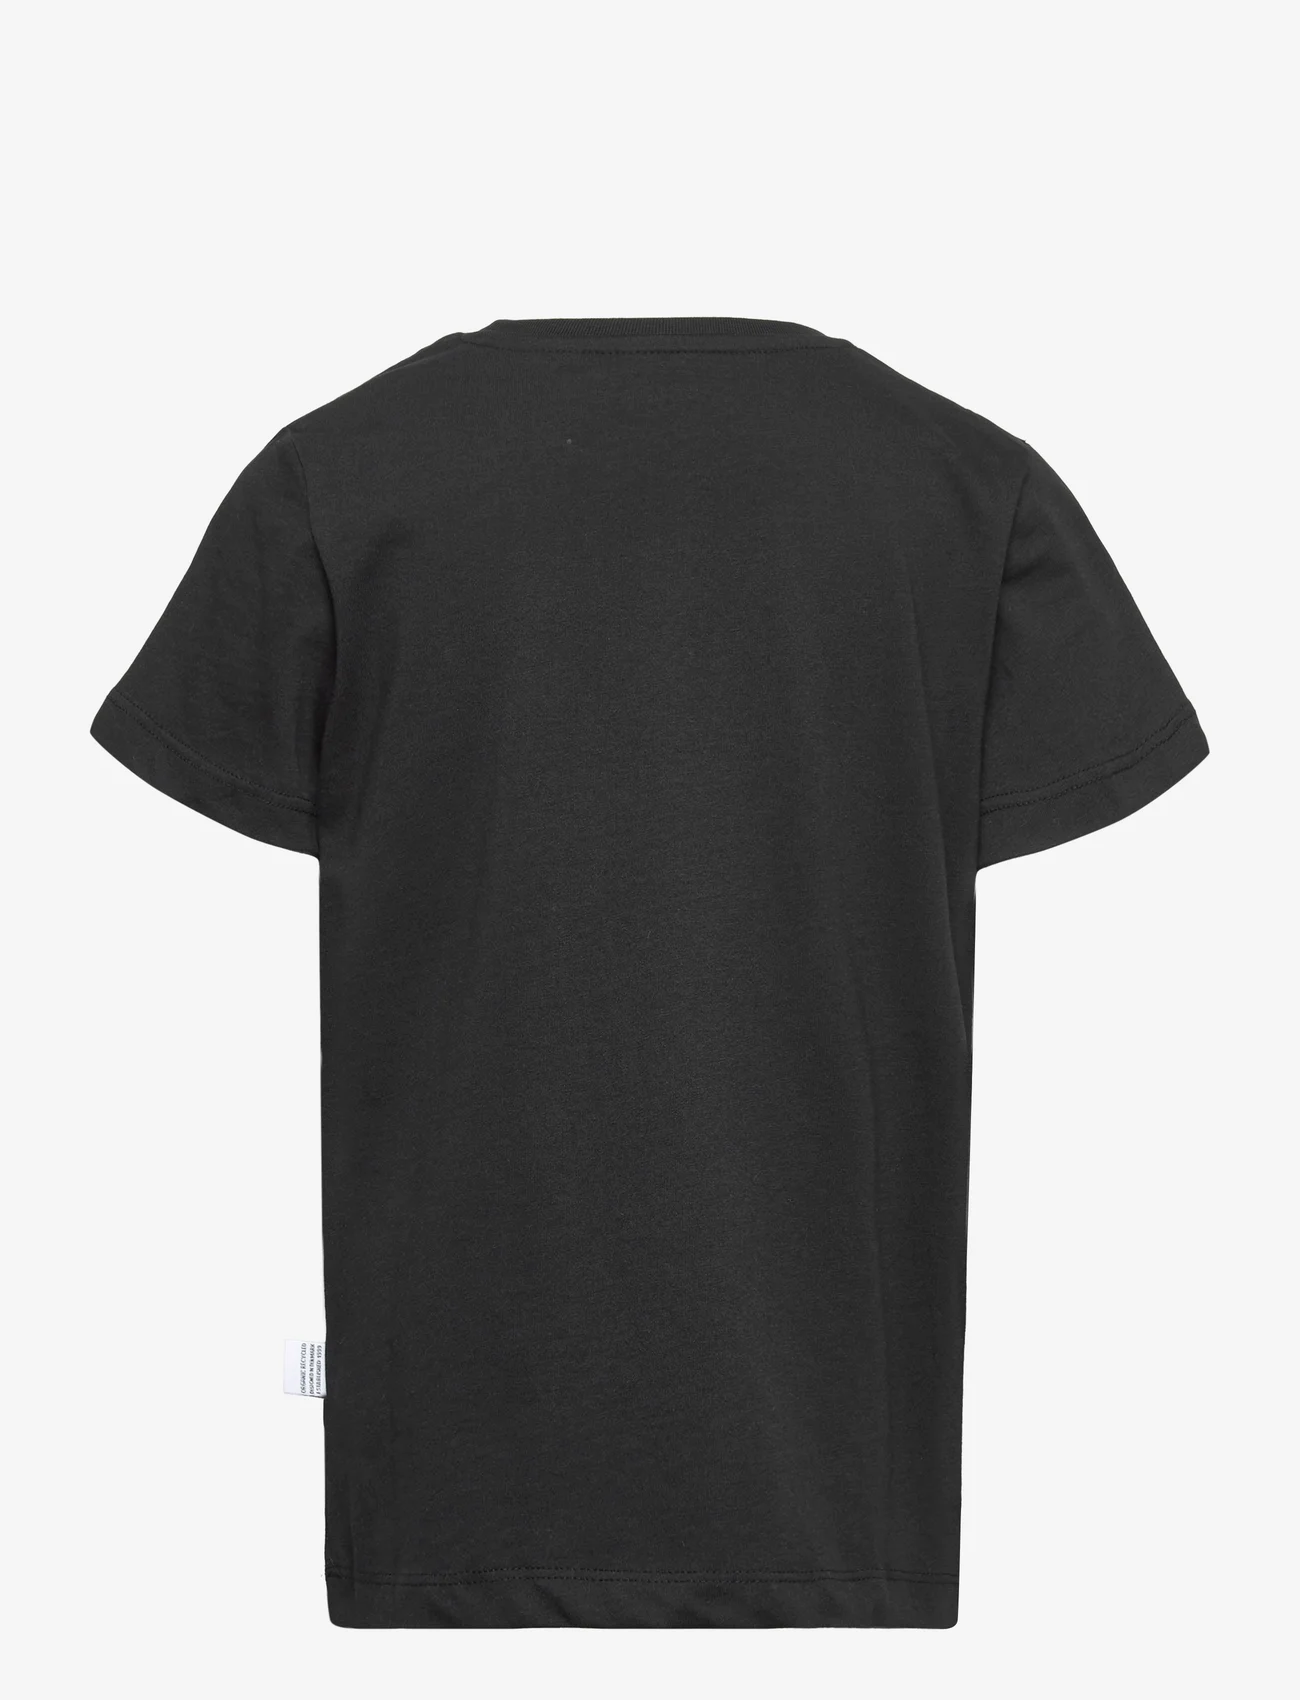 Kronstadt - Timmi Recycled - kortärmade t-shirts - black - 1